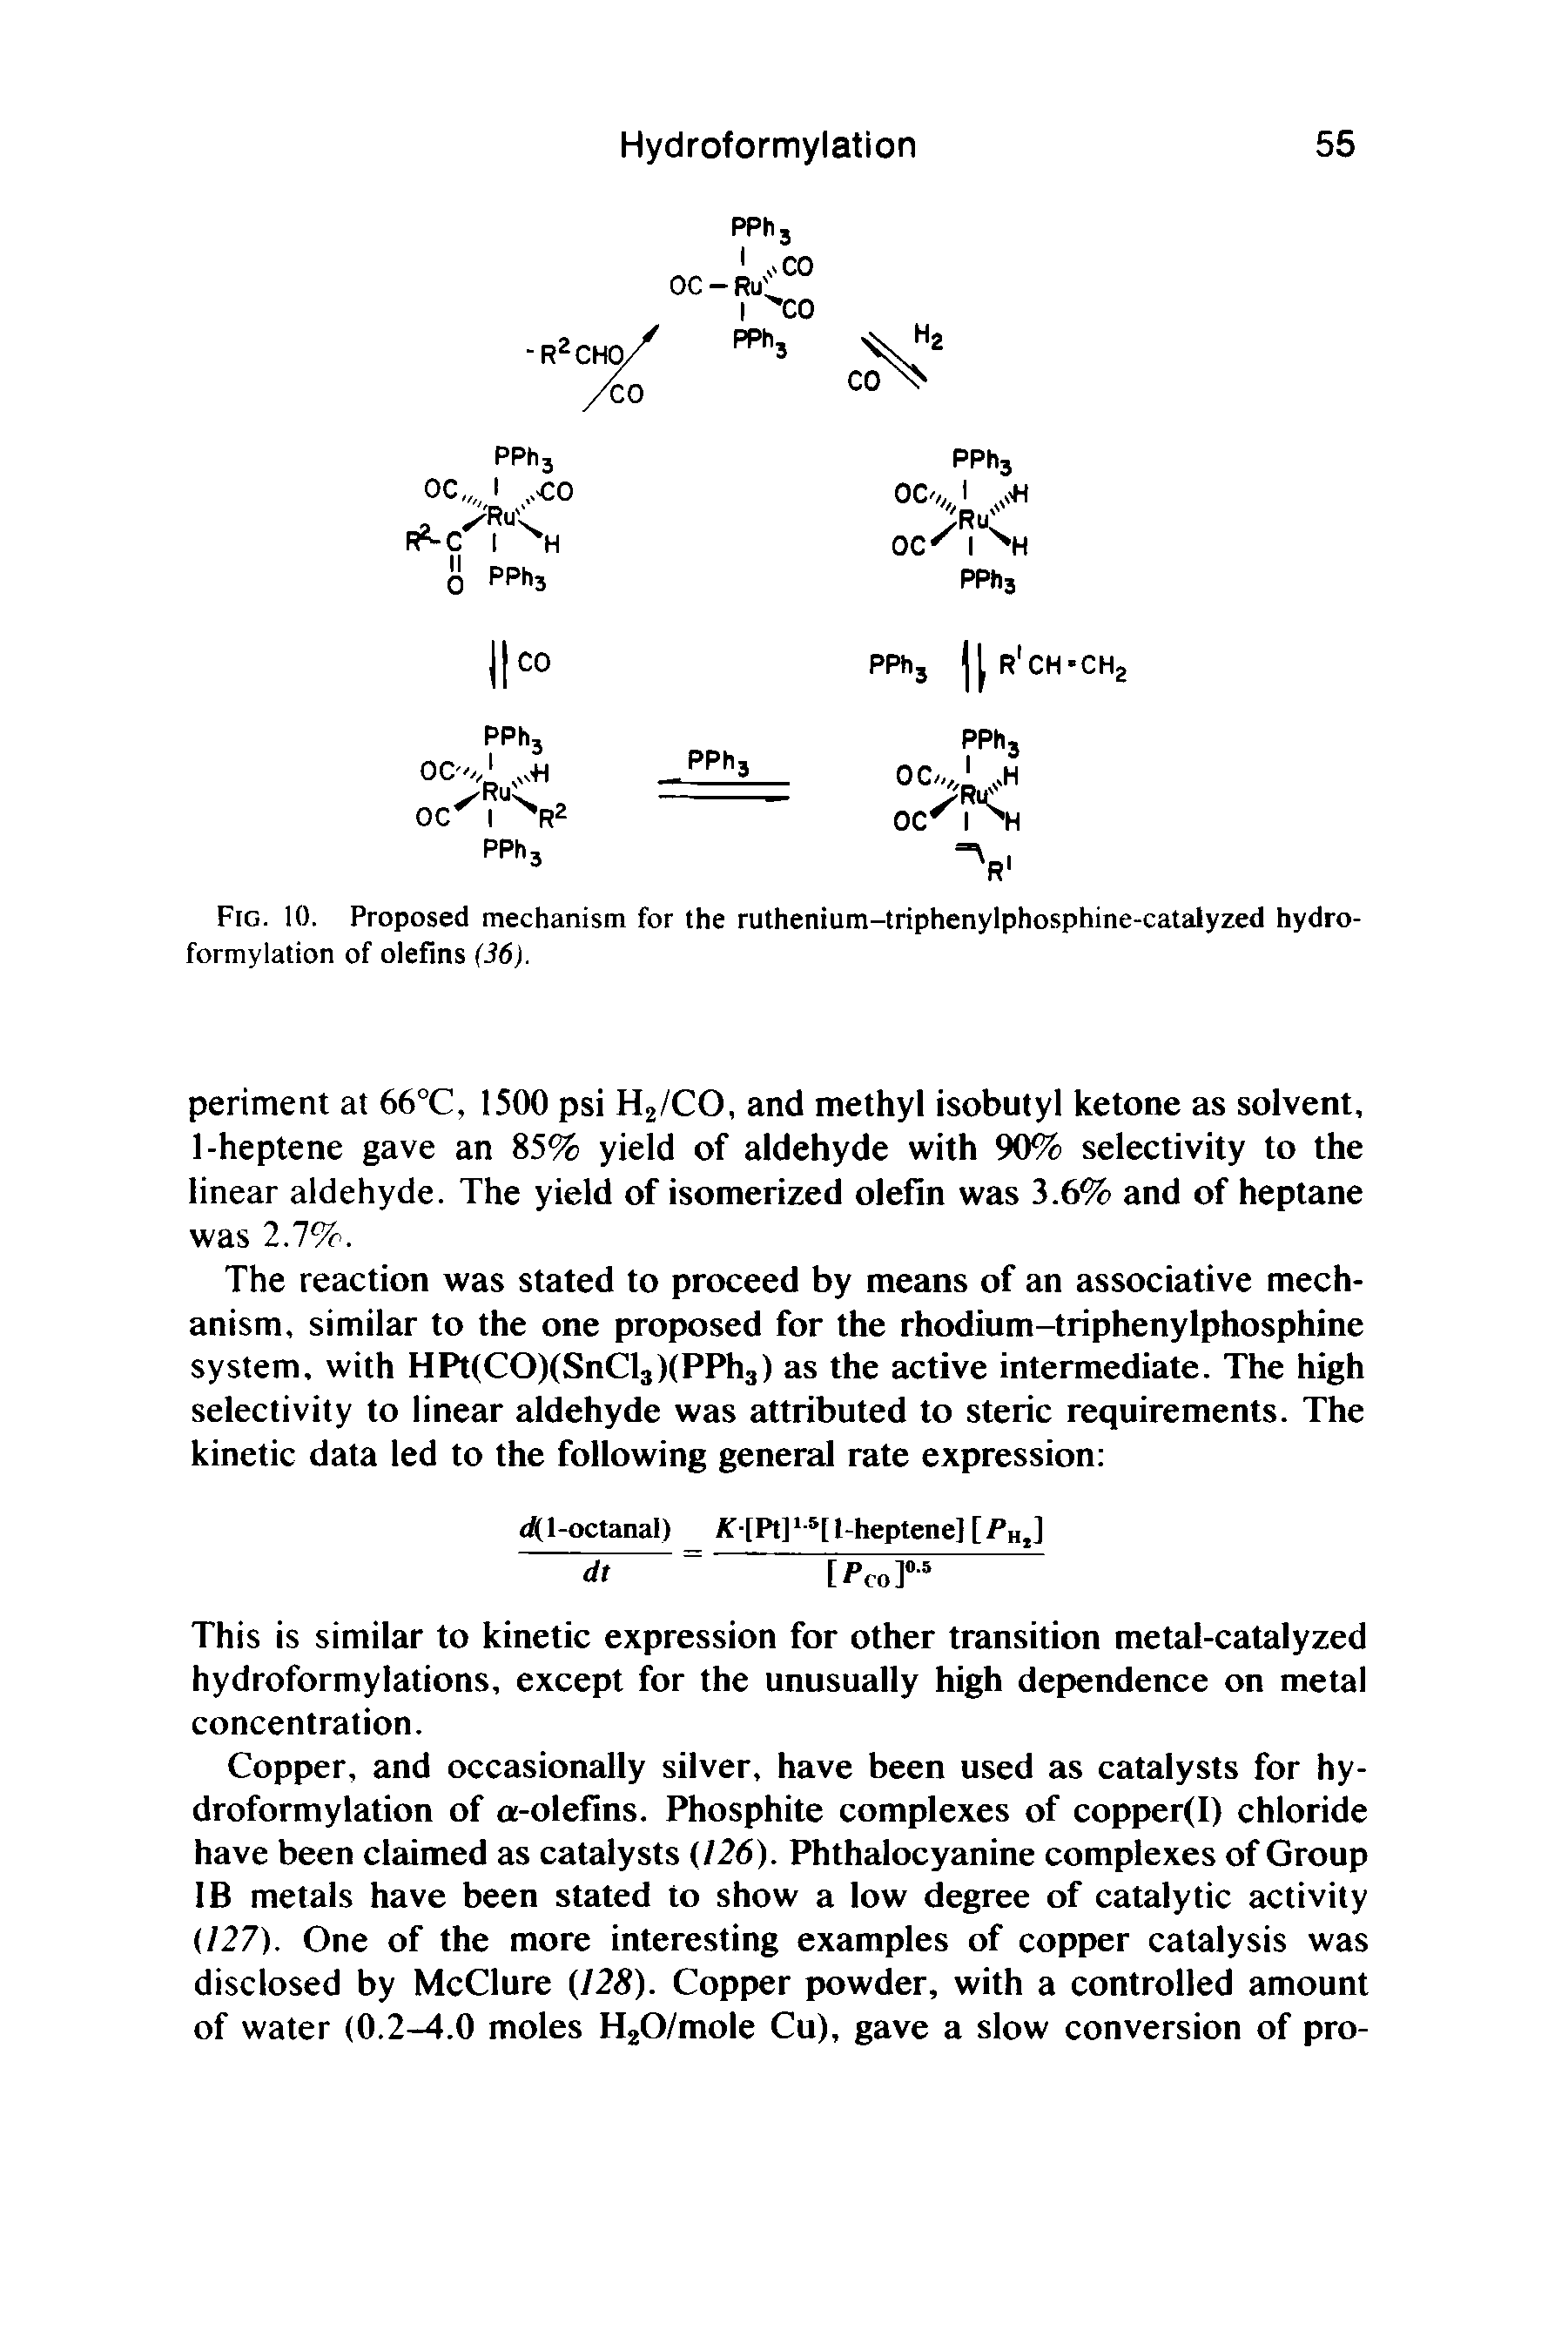 Fig. 10. Proposed mechanism for the ruthenium-triphenylphosphine-catalyzed hydroformylation of olefins (36).